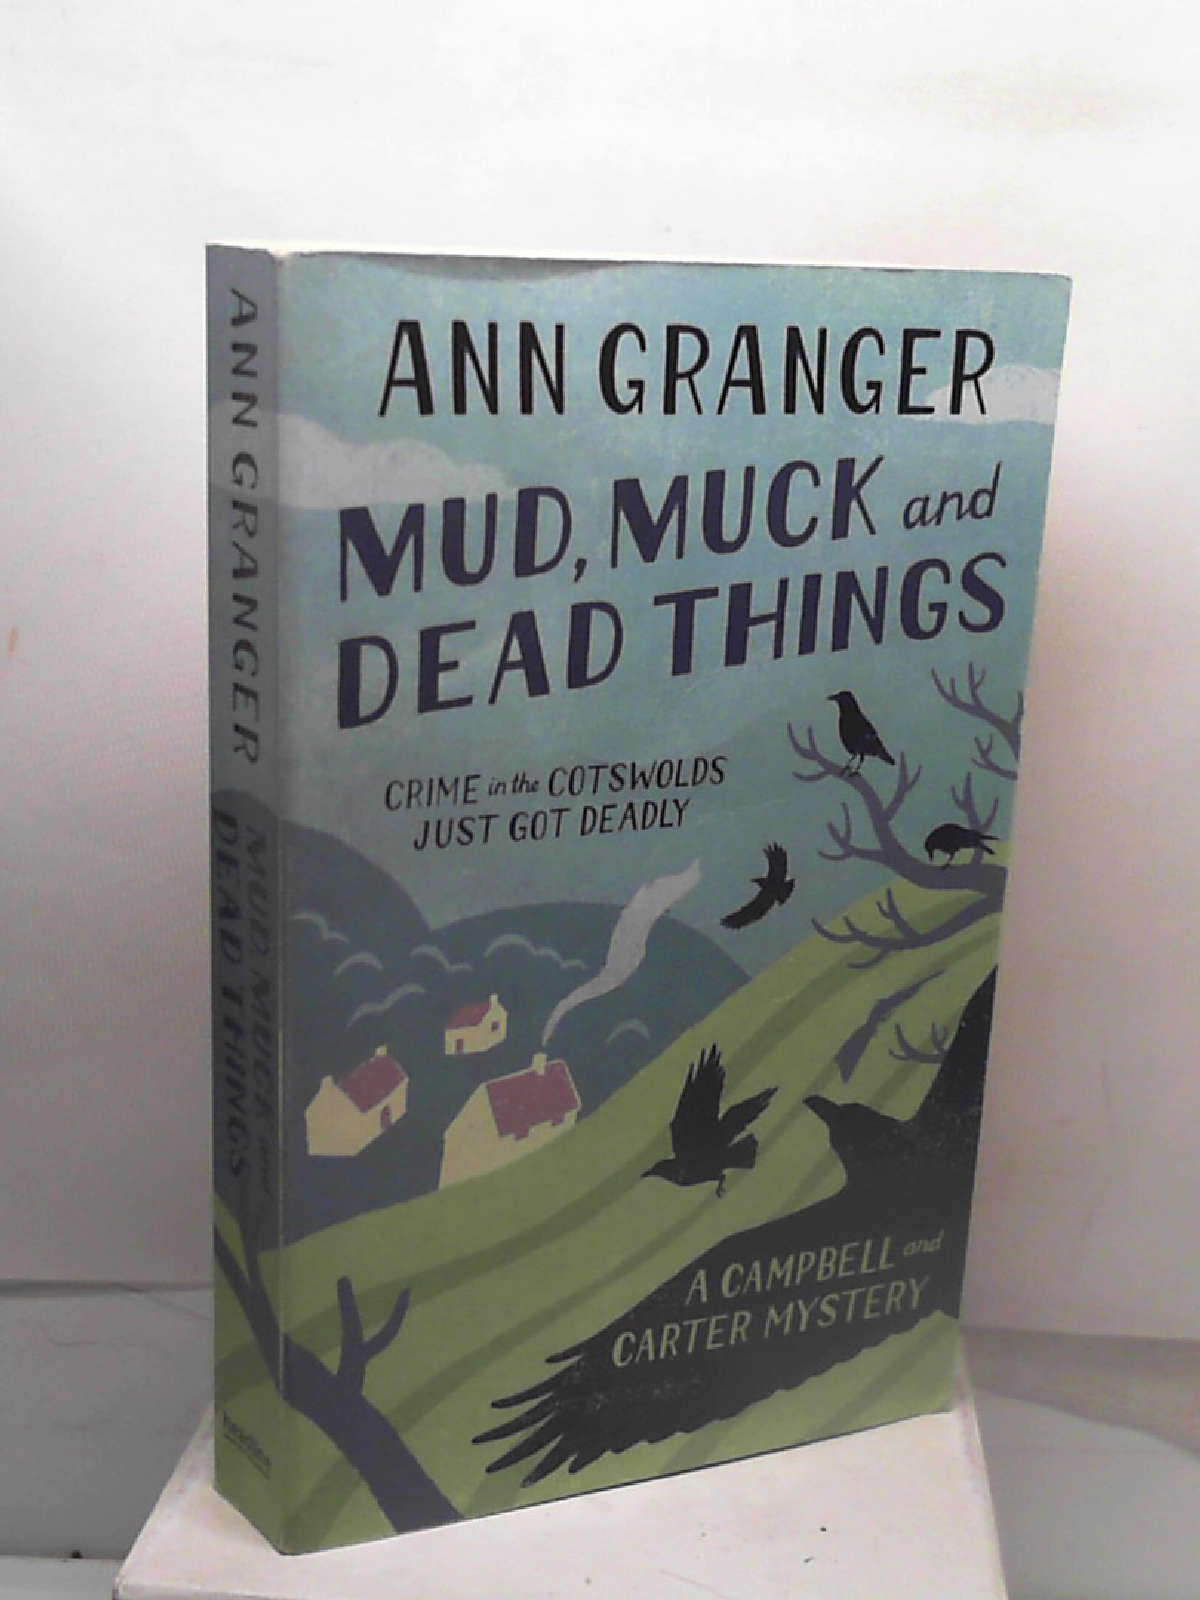 Mud, Muck and Dead Things: Campbell & Carter Mystery 1 Granger, Ann - Ann Granger